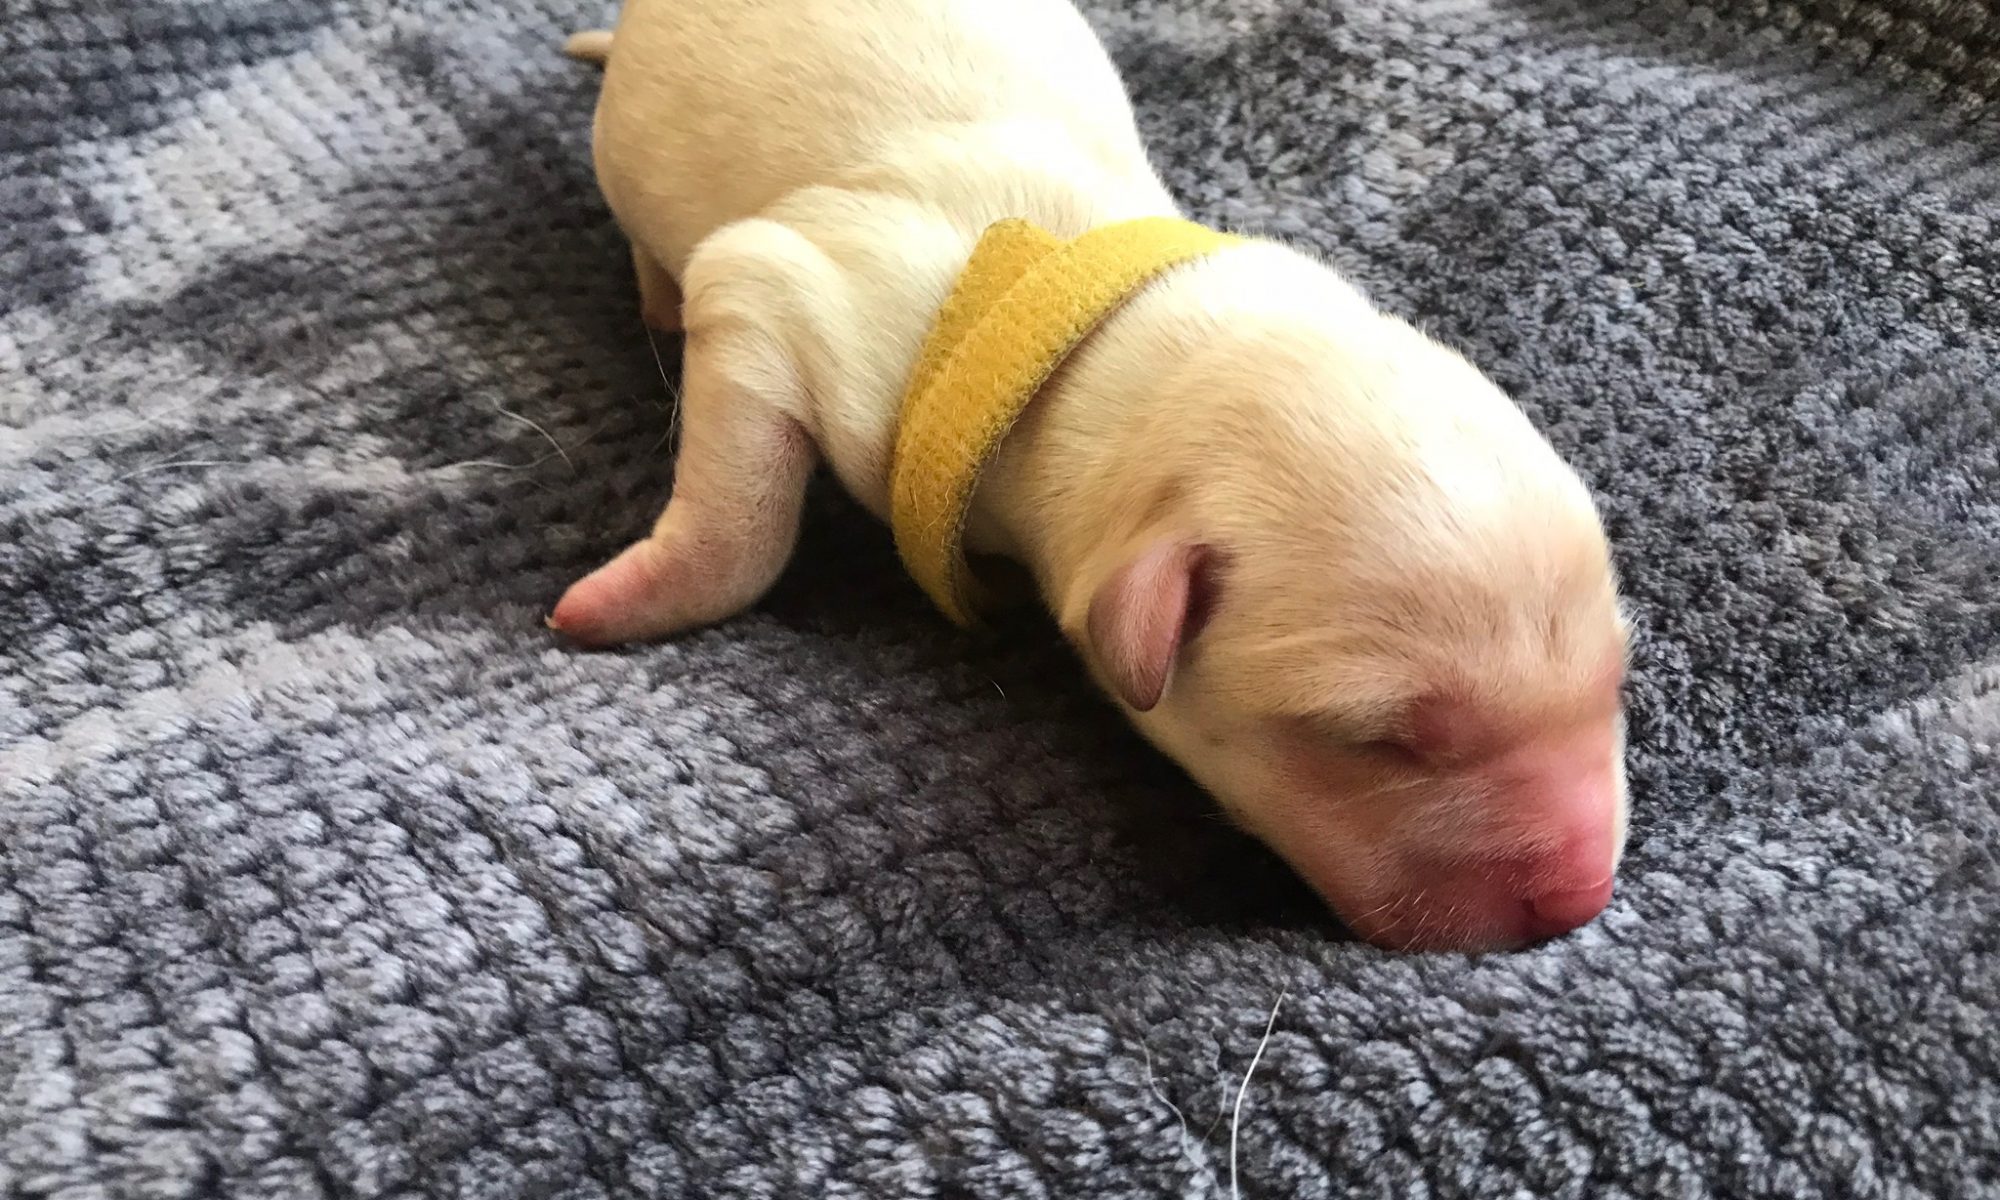 Bolt Labrador Puppy 1 day old